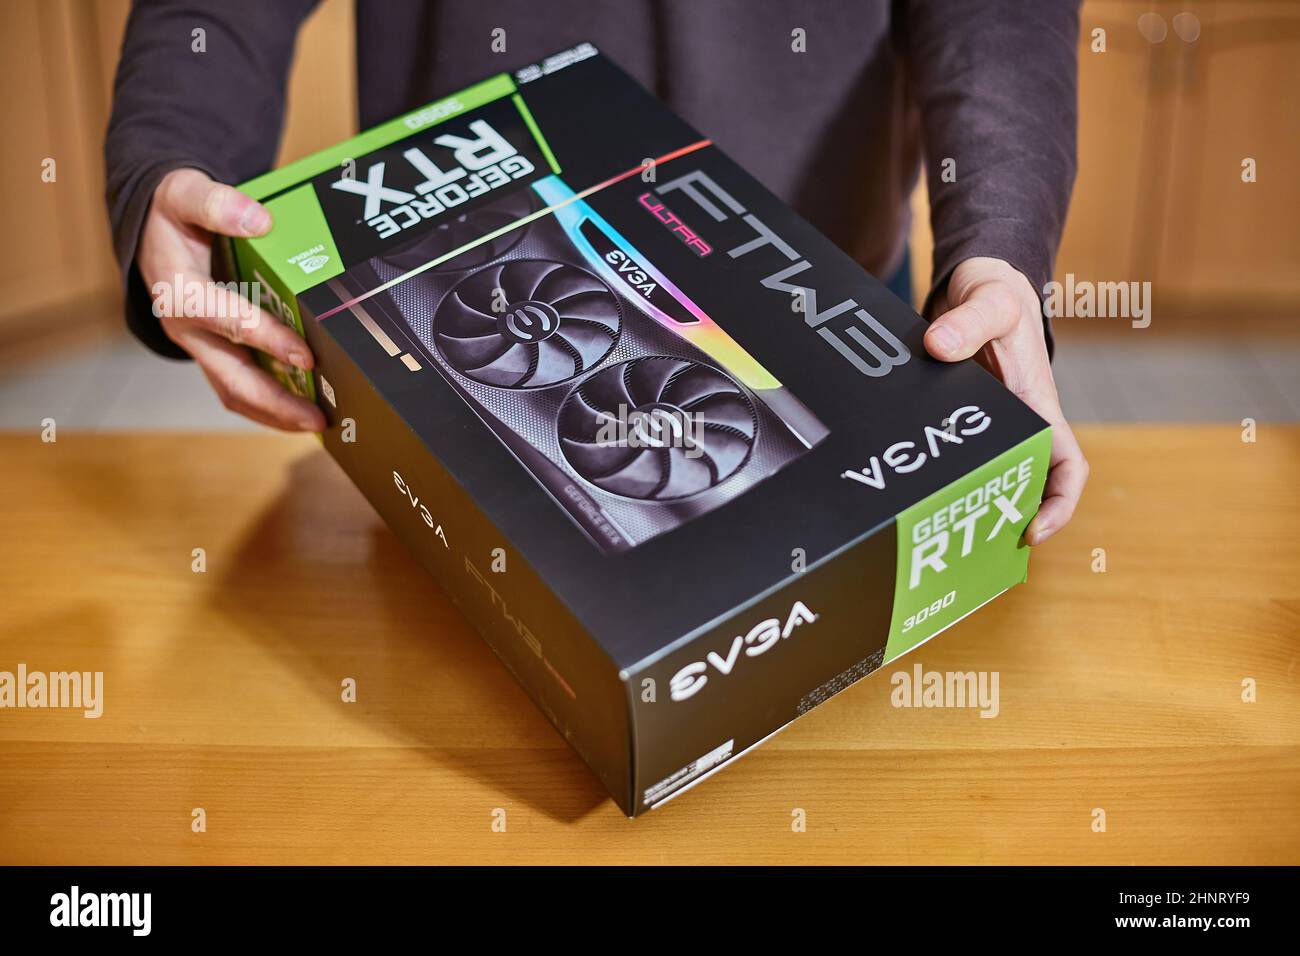 Buying EVGA Geforce RTX 3090 Nvidia GPU in a shop Stock Photo